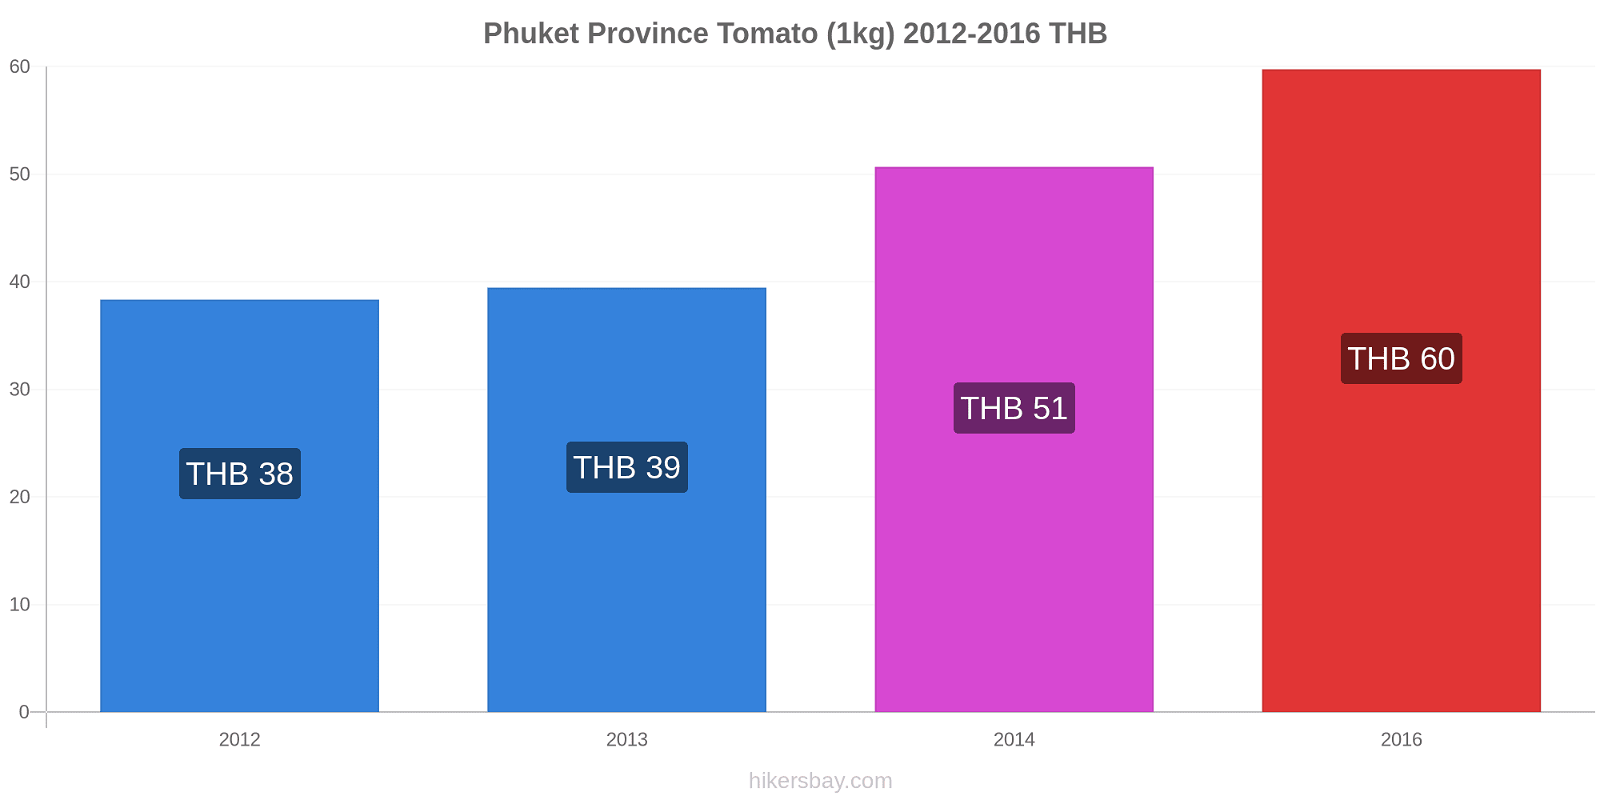 Phuket Province price changes Tomato (1kg) hikersbay.com